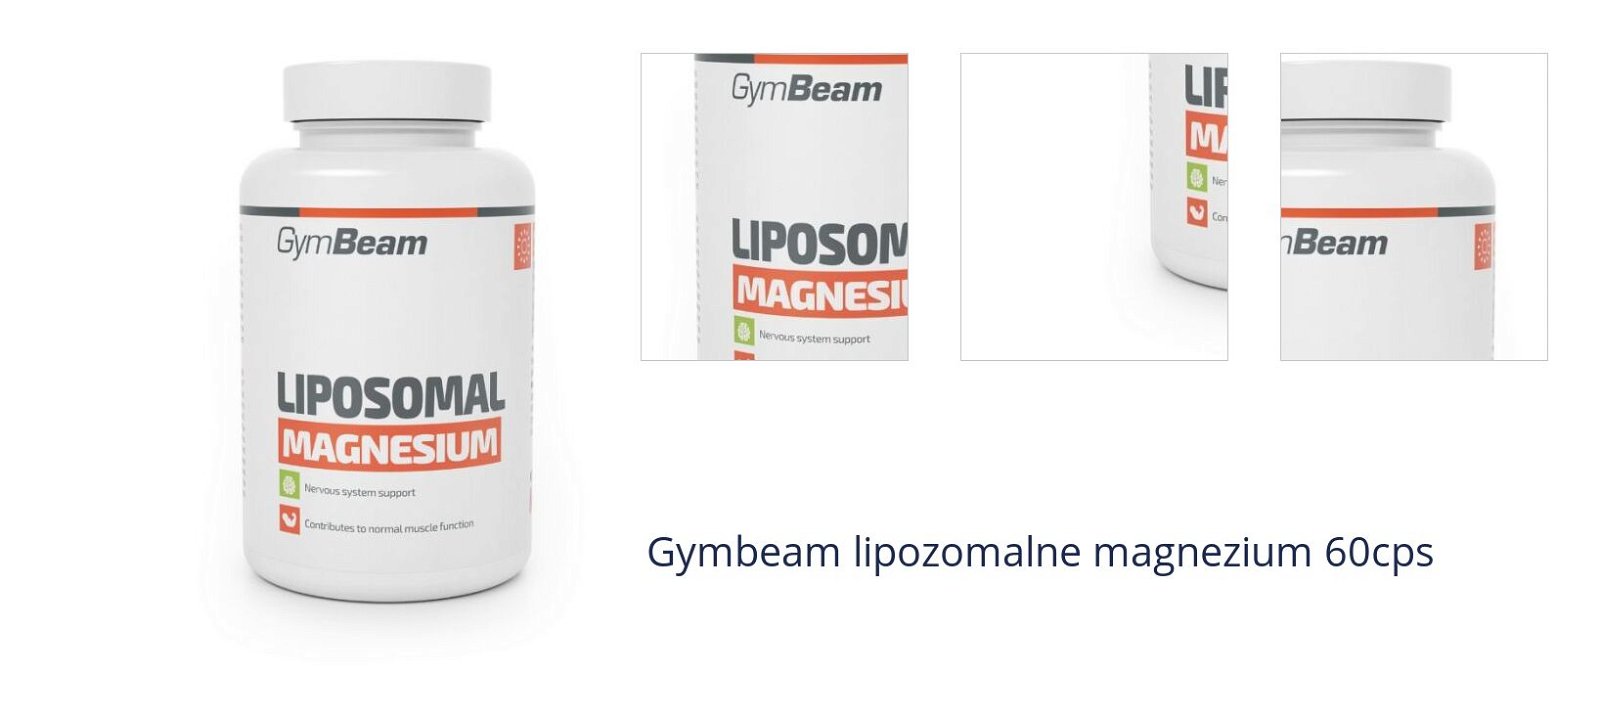 Gymbeam lipozomalne magnezium 60cps 1